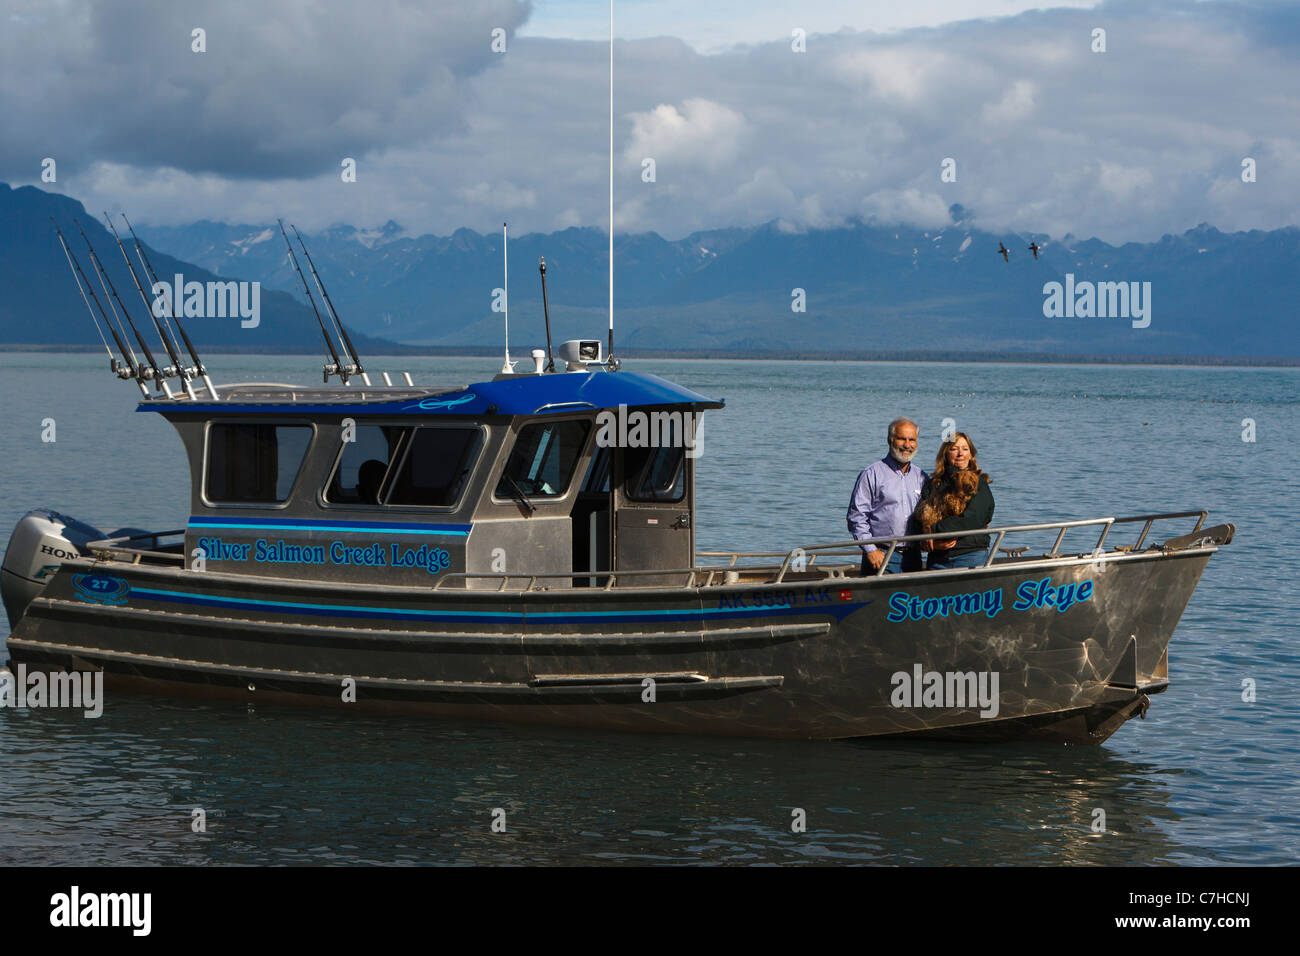 Owners of Silver Salmon Creek lodge in their boat Stormy Skye, Alaska Maritime National Wildlife Refuge, Alaska, United States Stock Photo